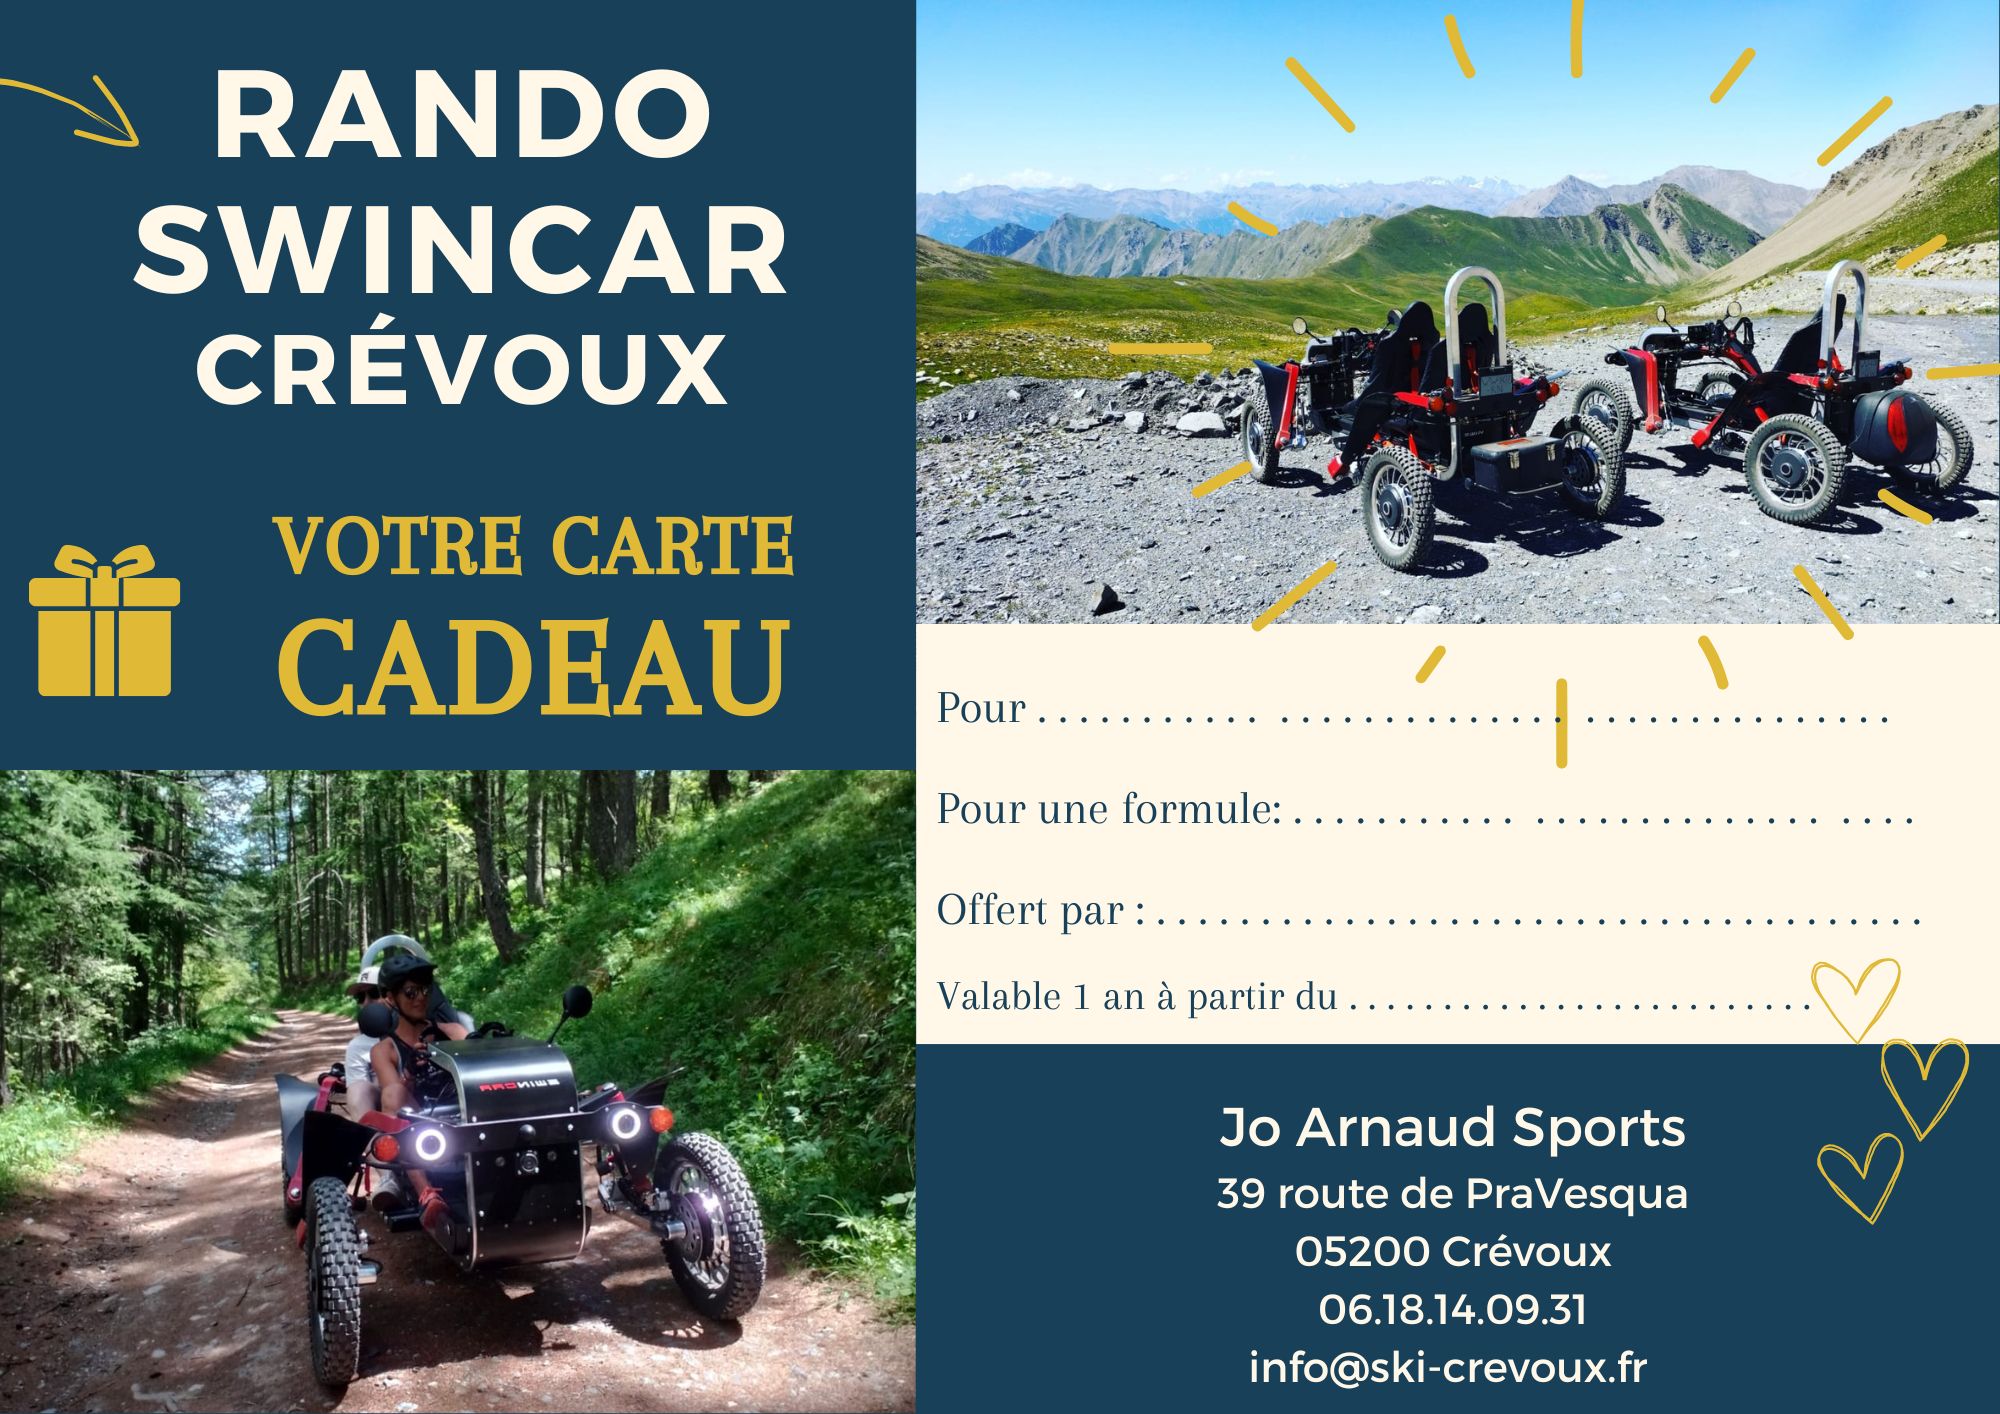 Jo Arnaud Sports - Swincar